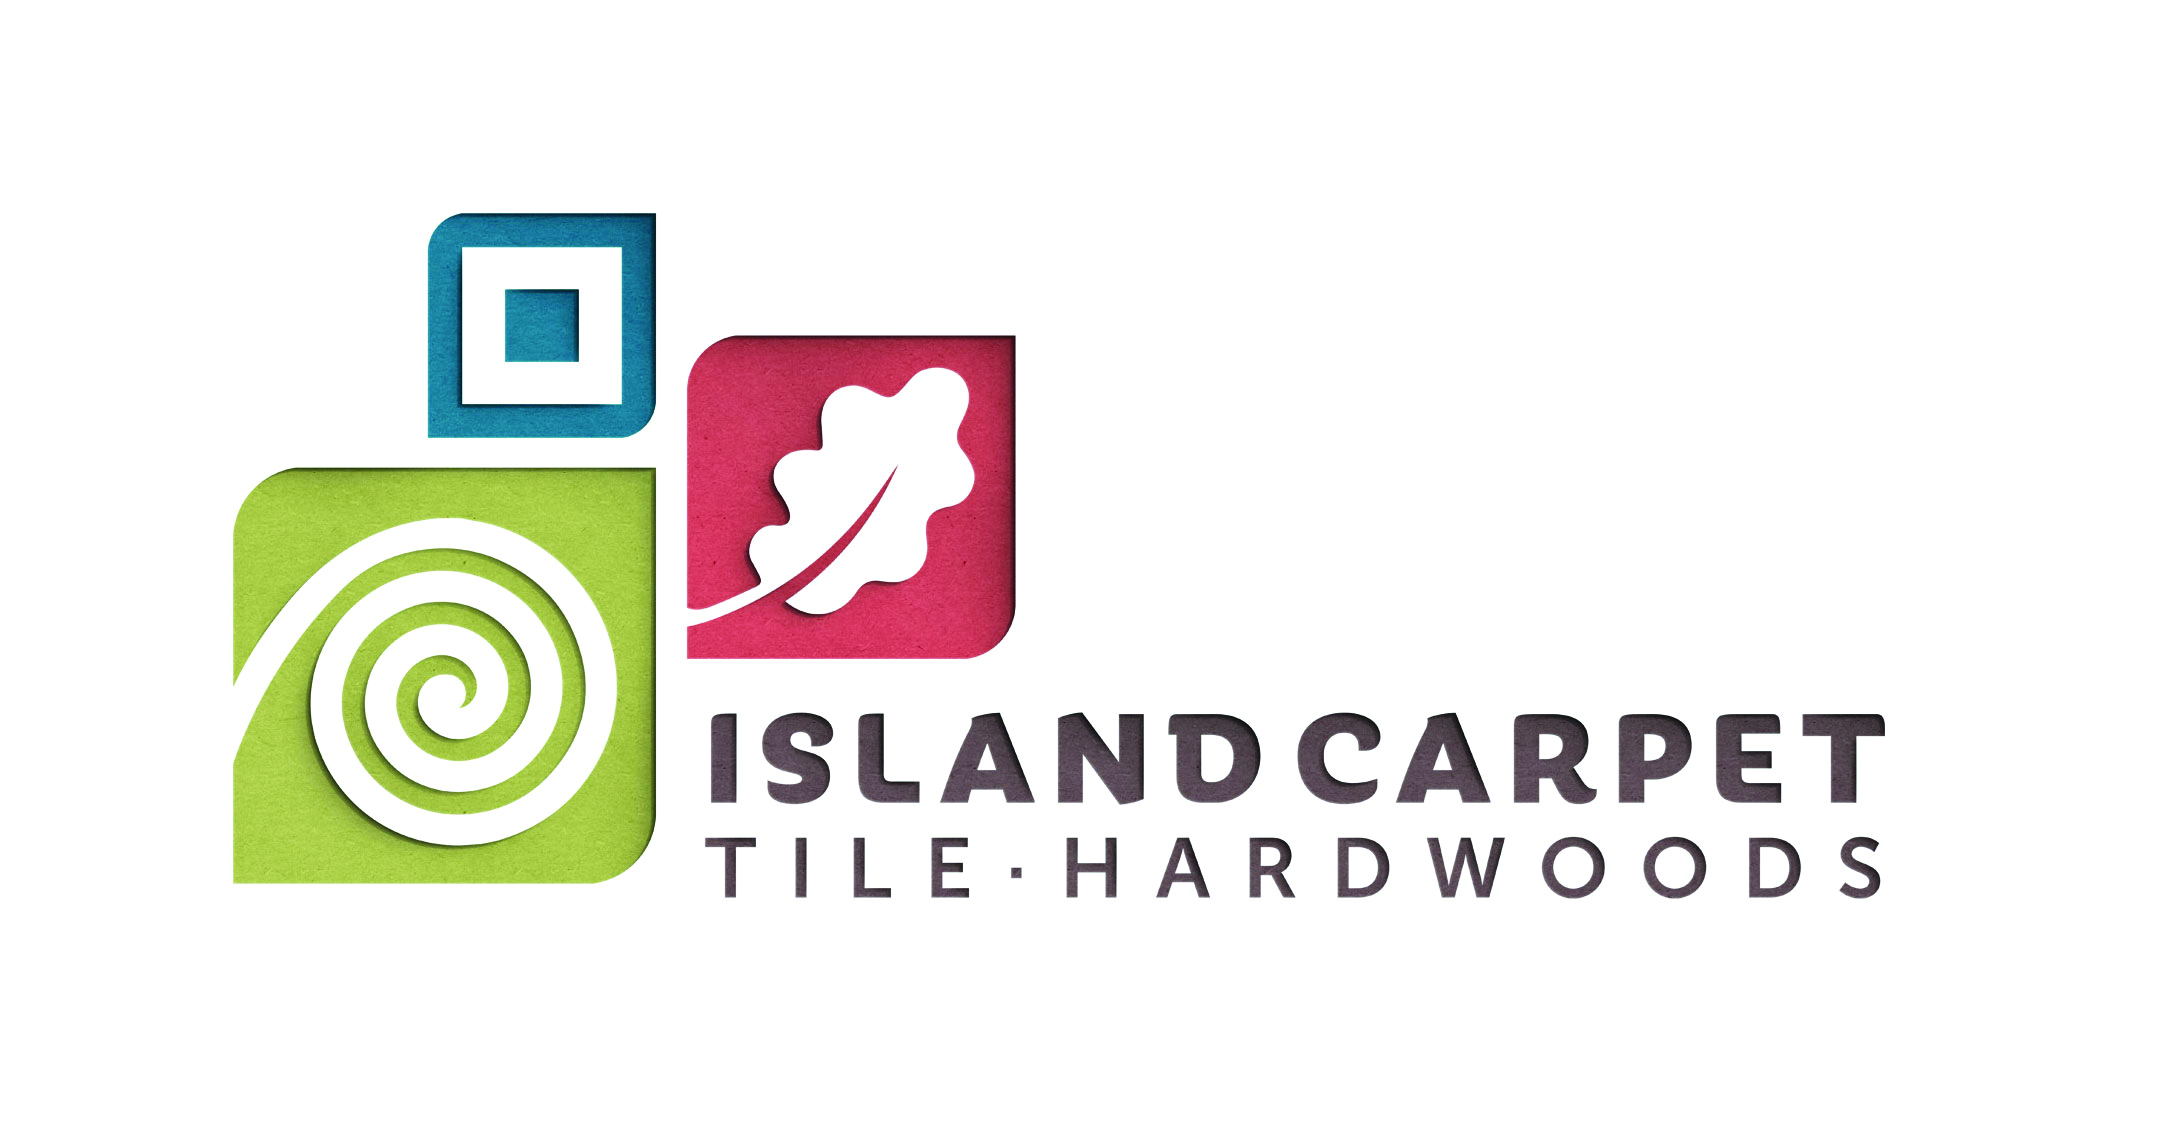 Island Carpet Tile & Hardwoods